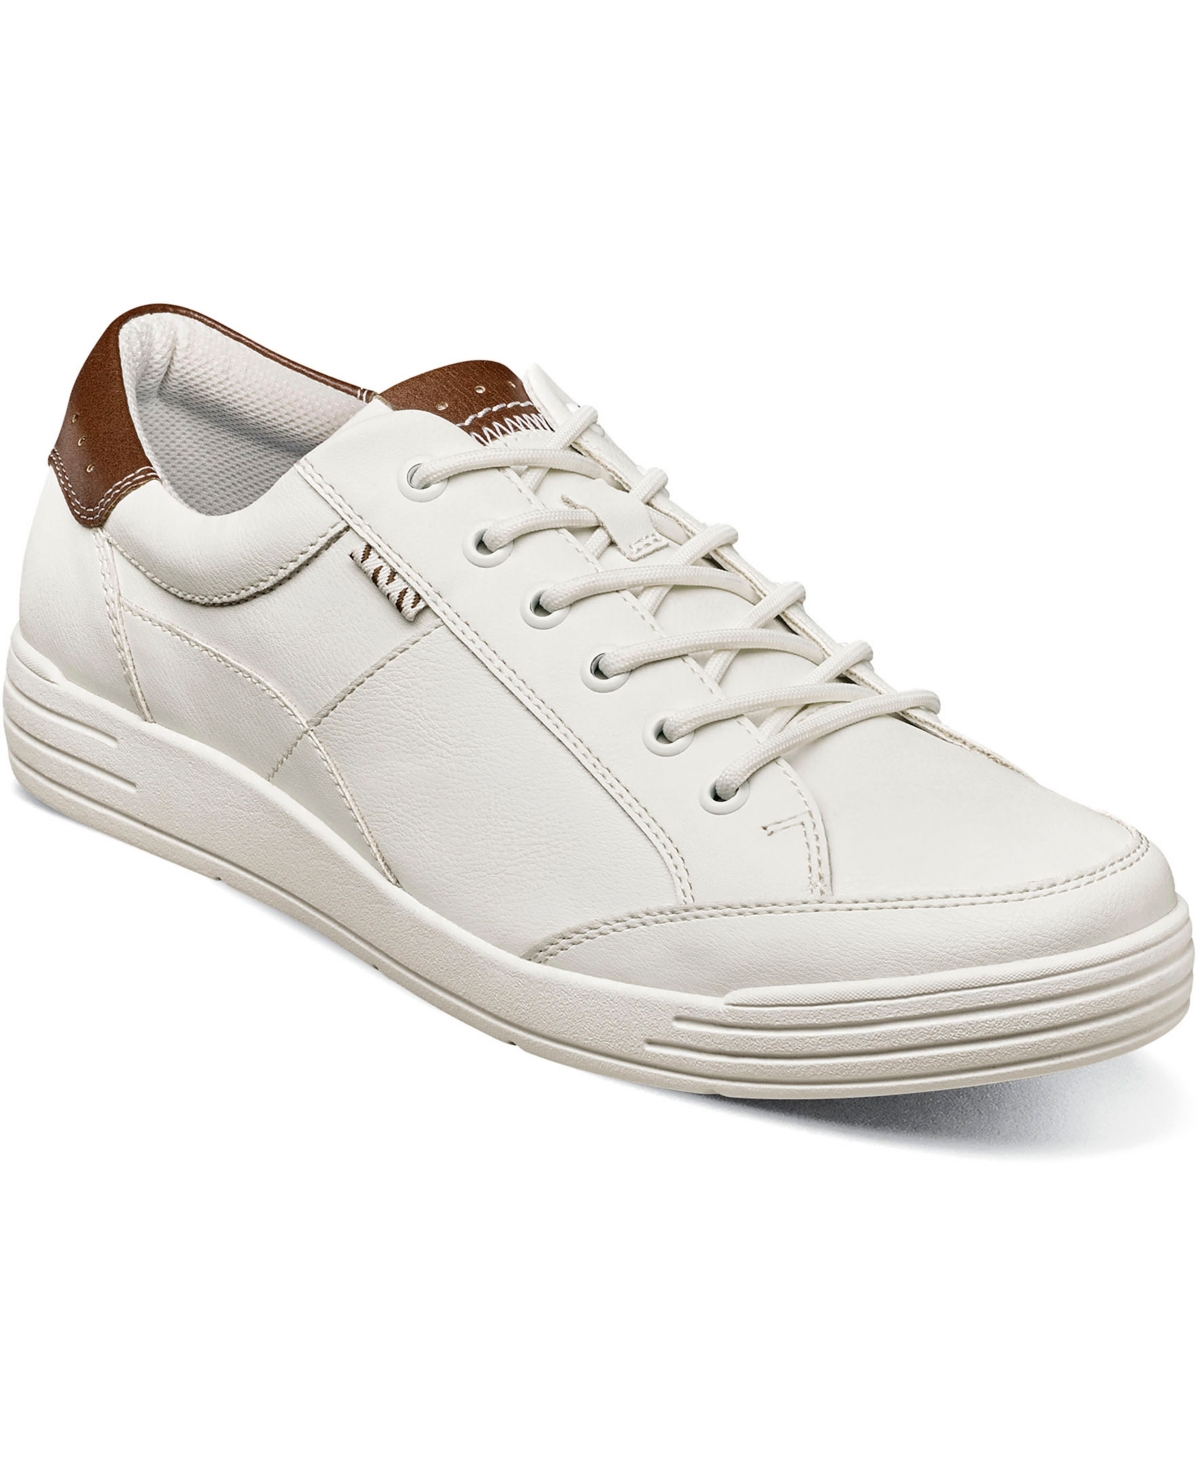 Men's Kore City Walk Lace To Toe Oxford Shoes - White